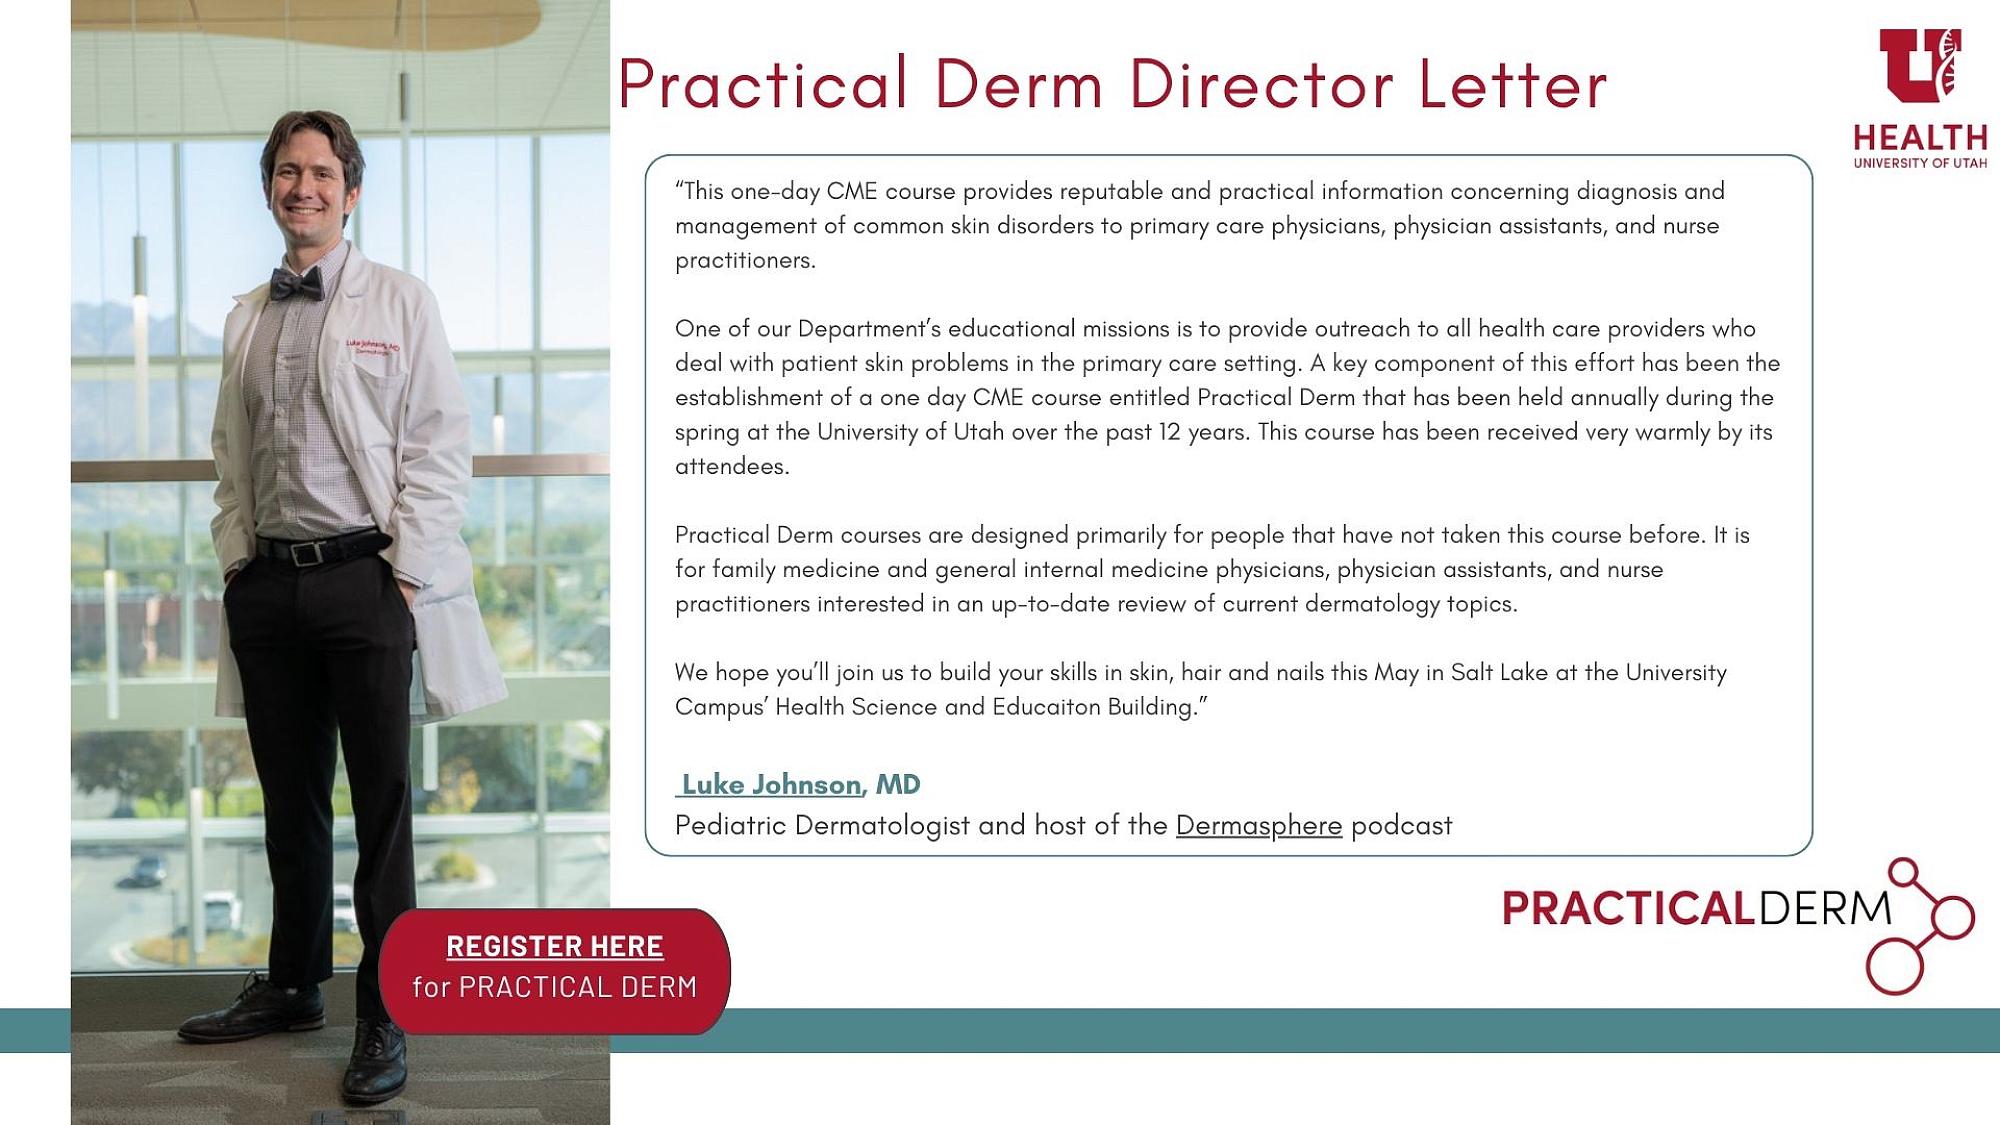 letter from dr. luke johnson about the practical derm program